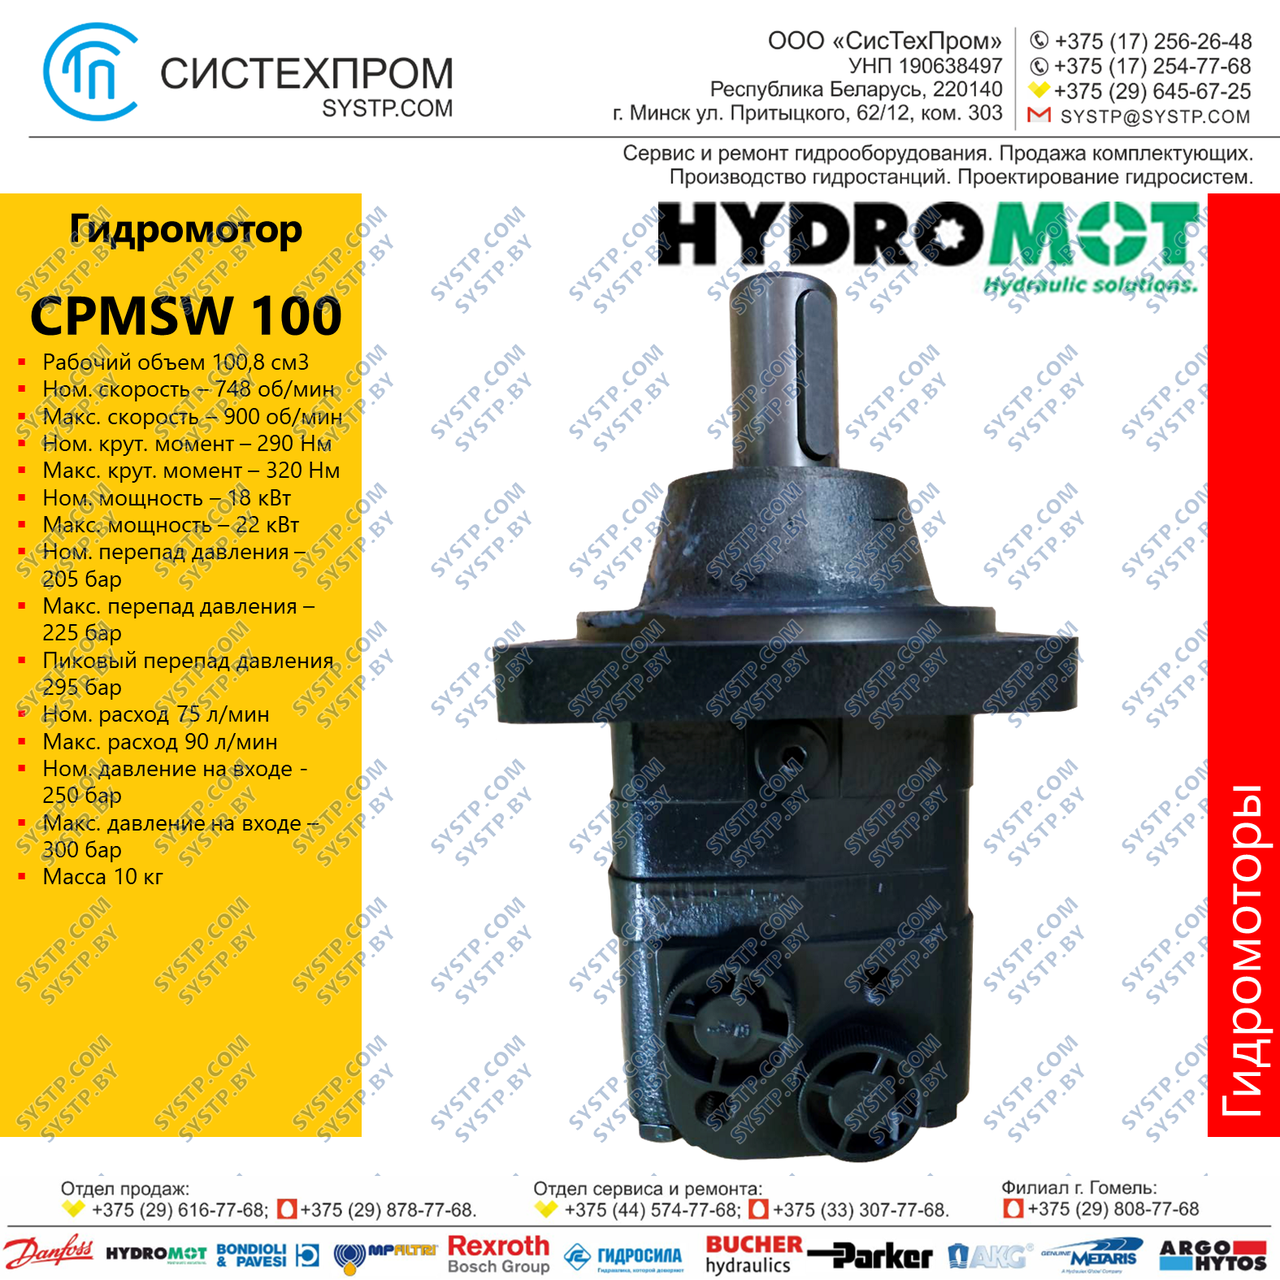 Гидромотор CPMSW 100